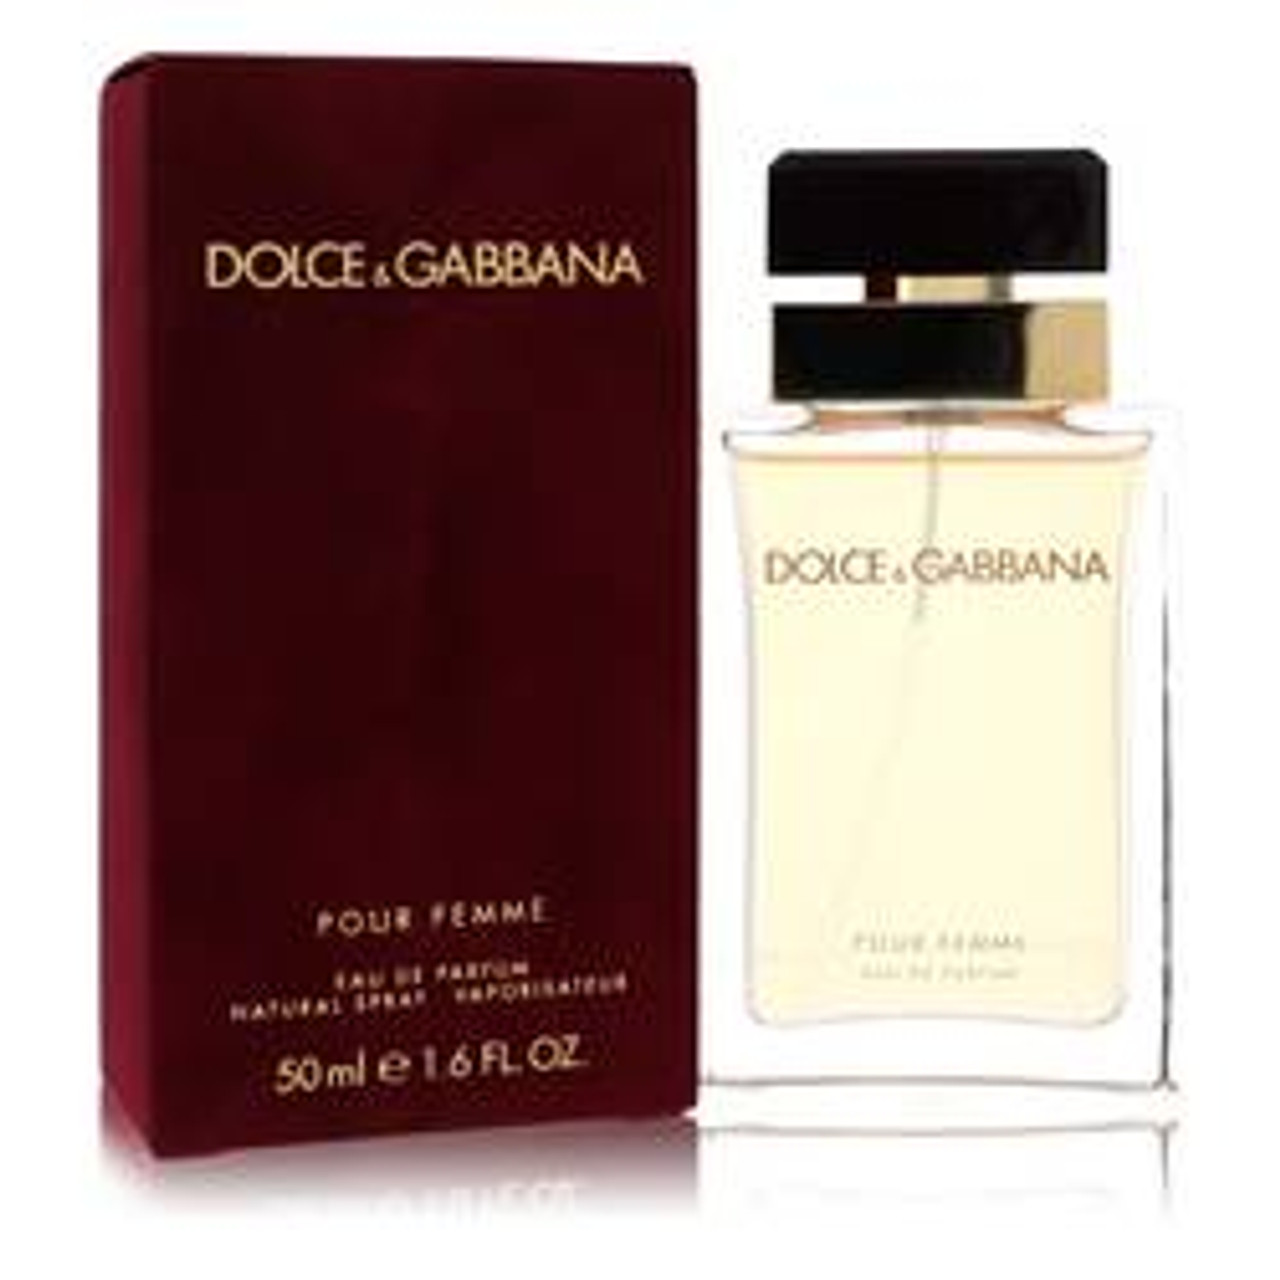 Dolce & Gabbana Pour Femme Perfume By Dolce & Gabbana Eau De Parfum Spray 1.7 oz for Women - *Pre-Order